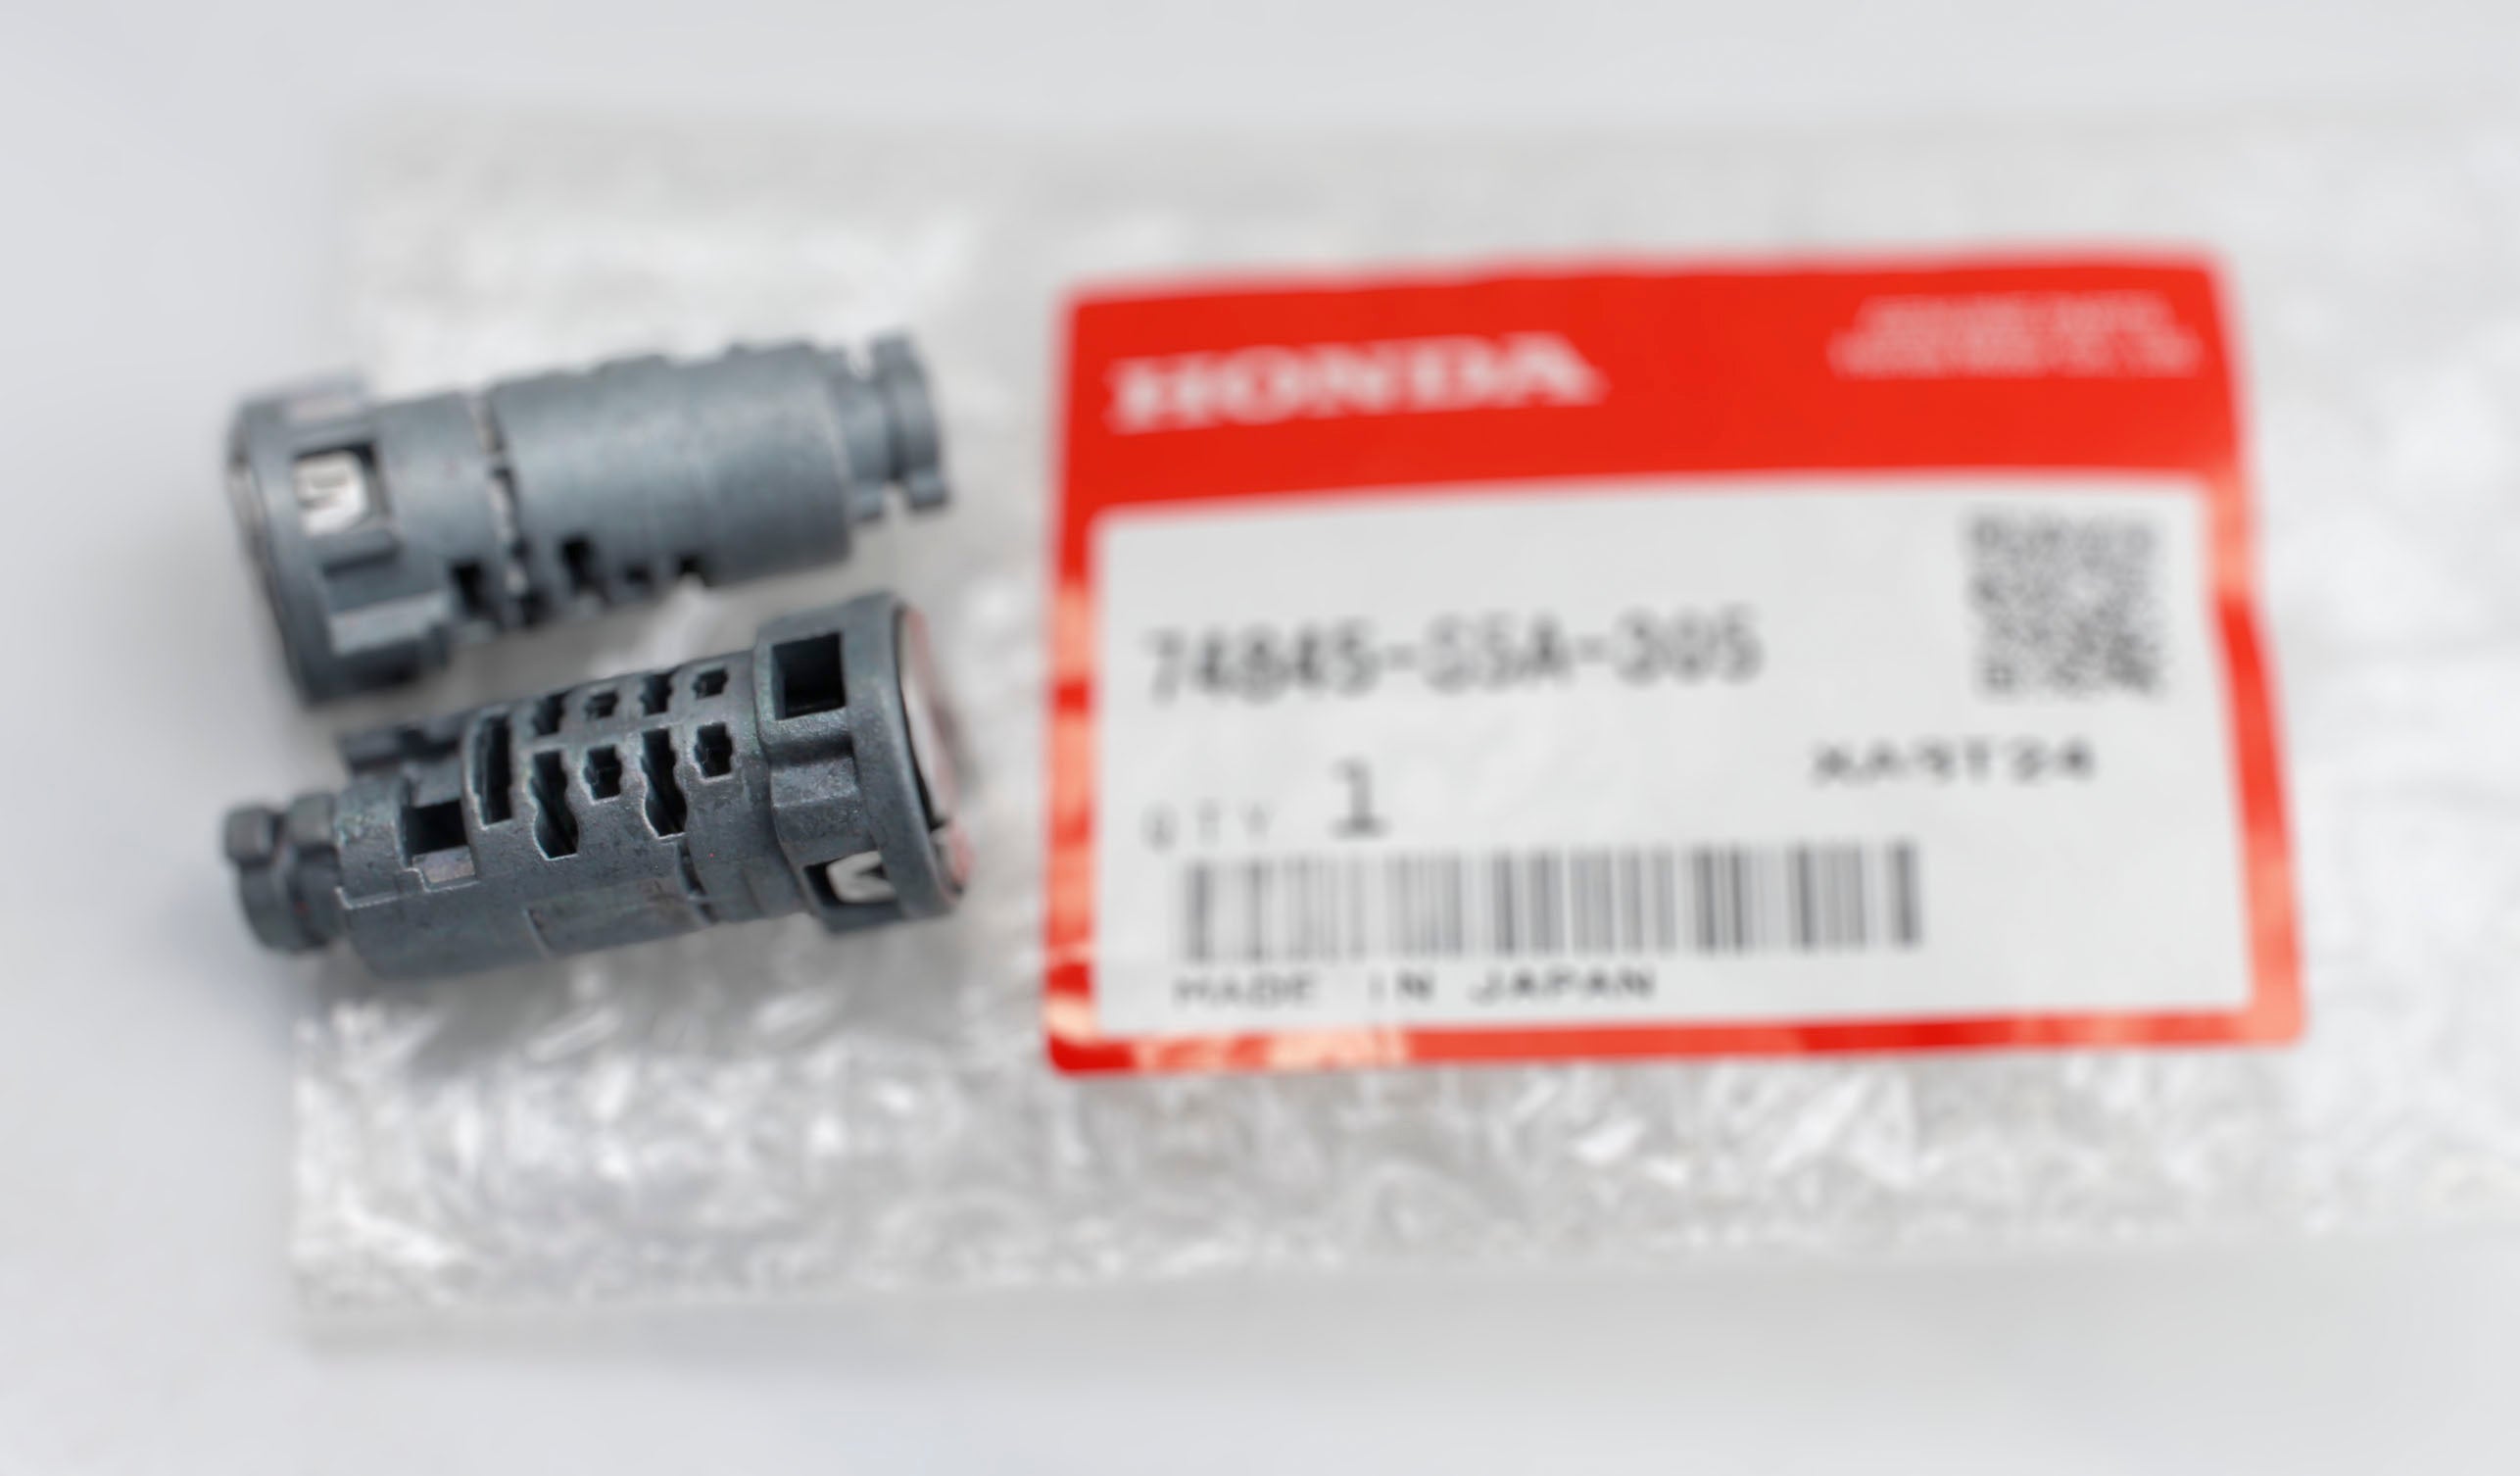 Honda OEM Trunk/Hatch Cylinders Plugs for the Honda OEM Tumbler Kit - Refill pack of 2